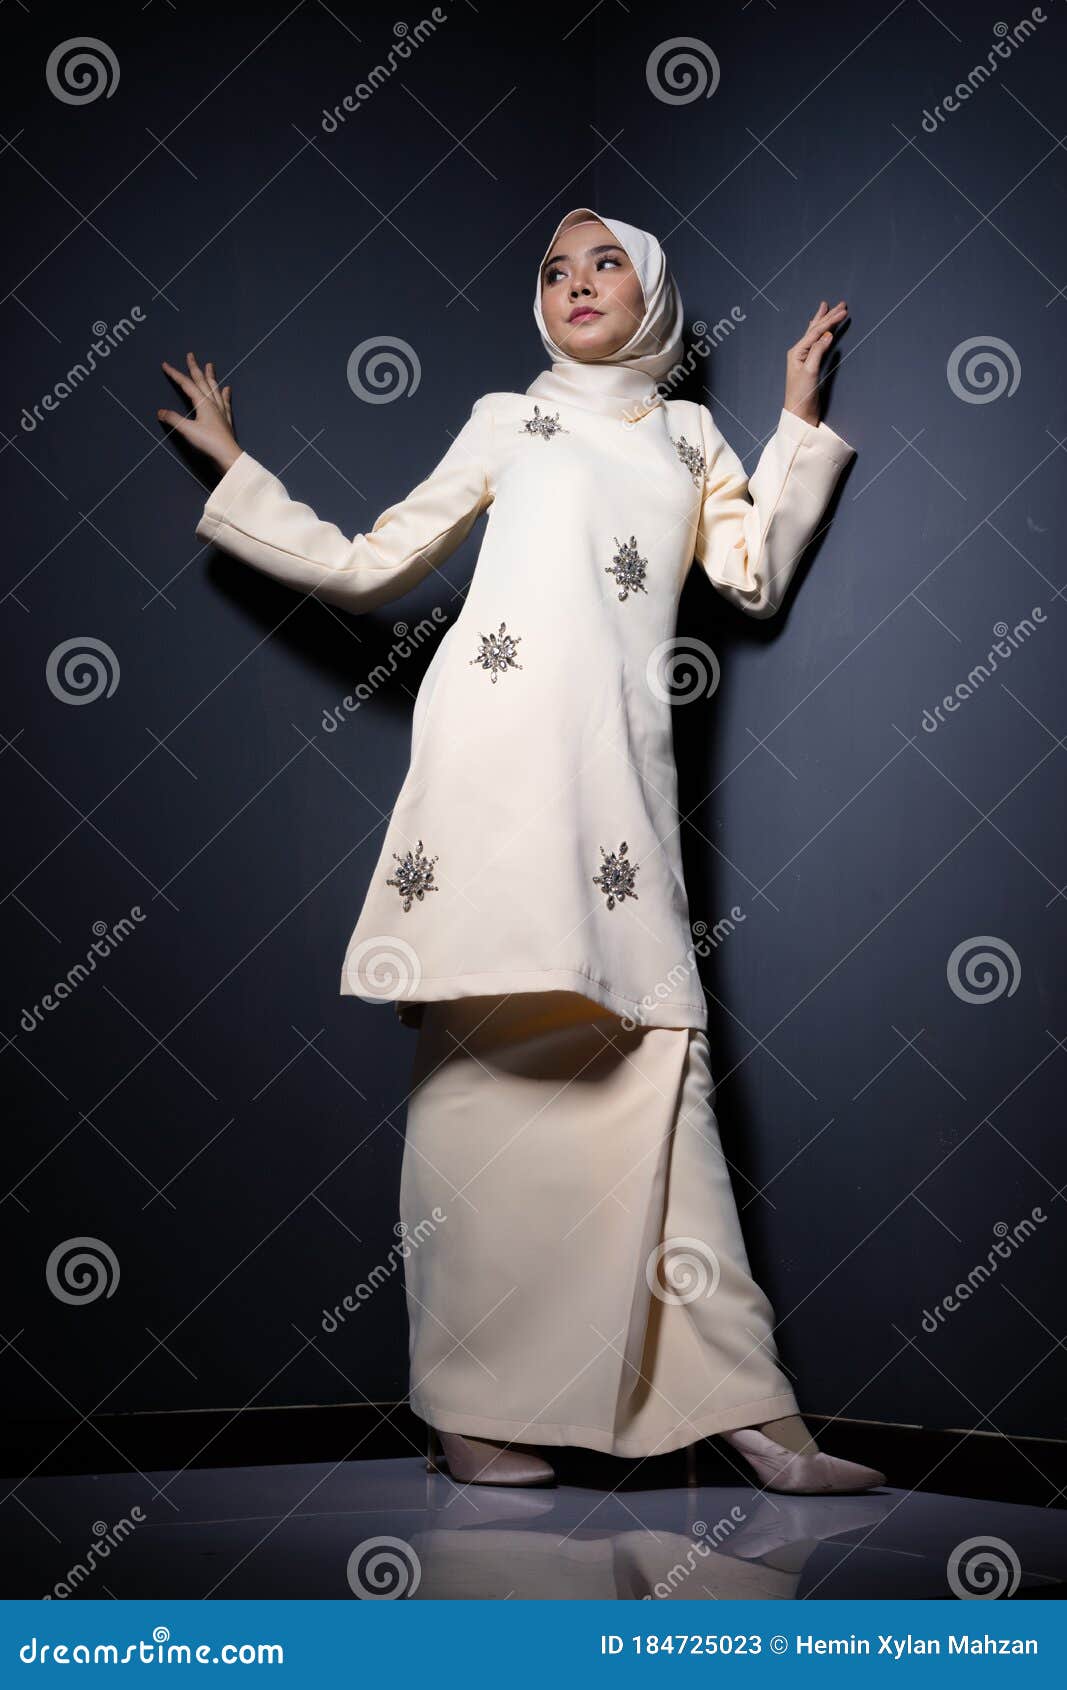 Muslimah Lifestyle Fashion Concept Stock Image - Image of ...